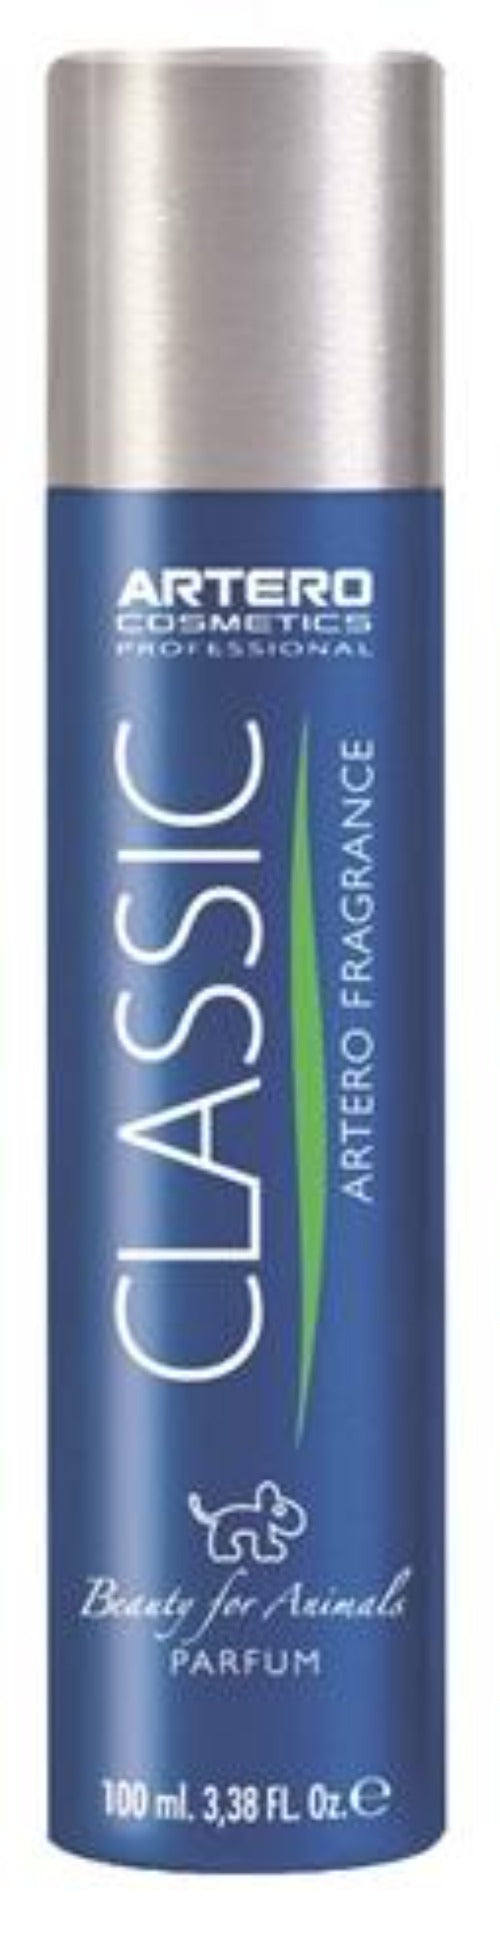 Artero Classic Parfumspray 90 ML